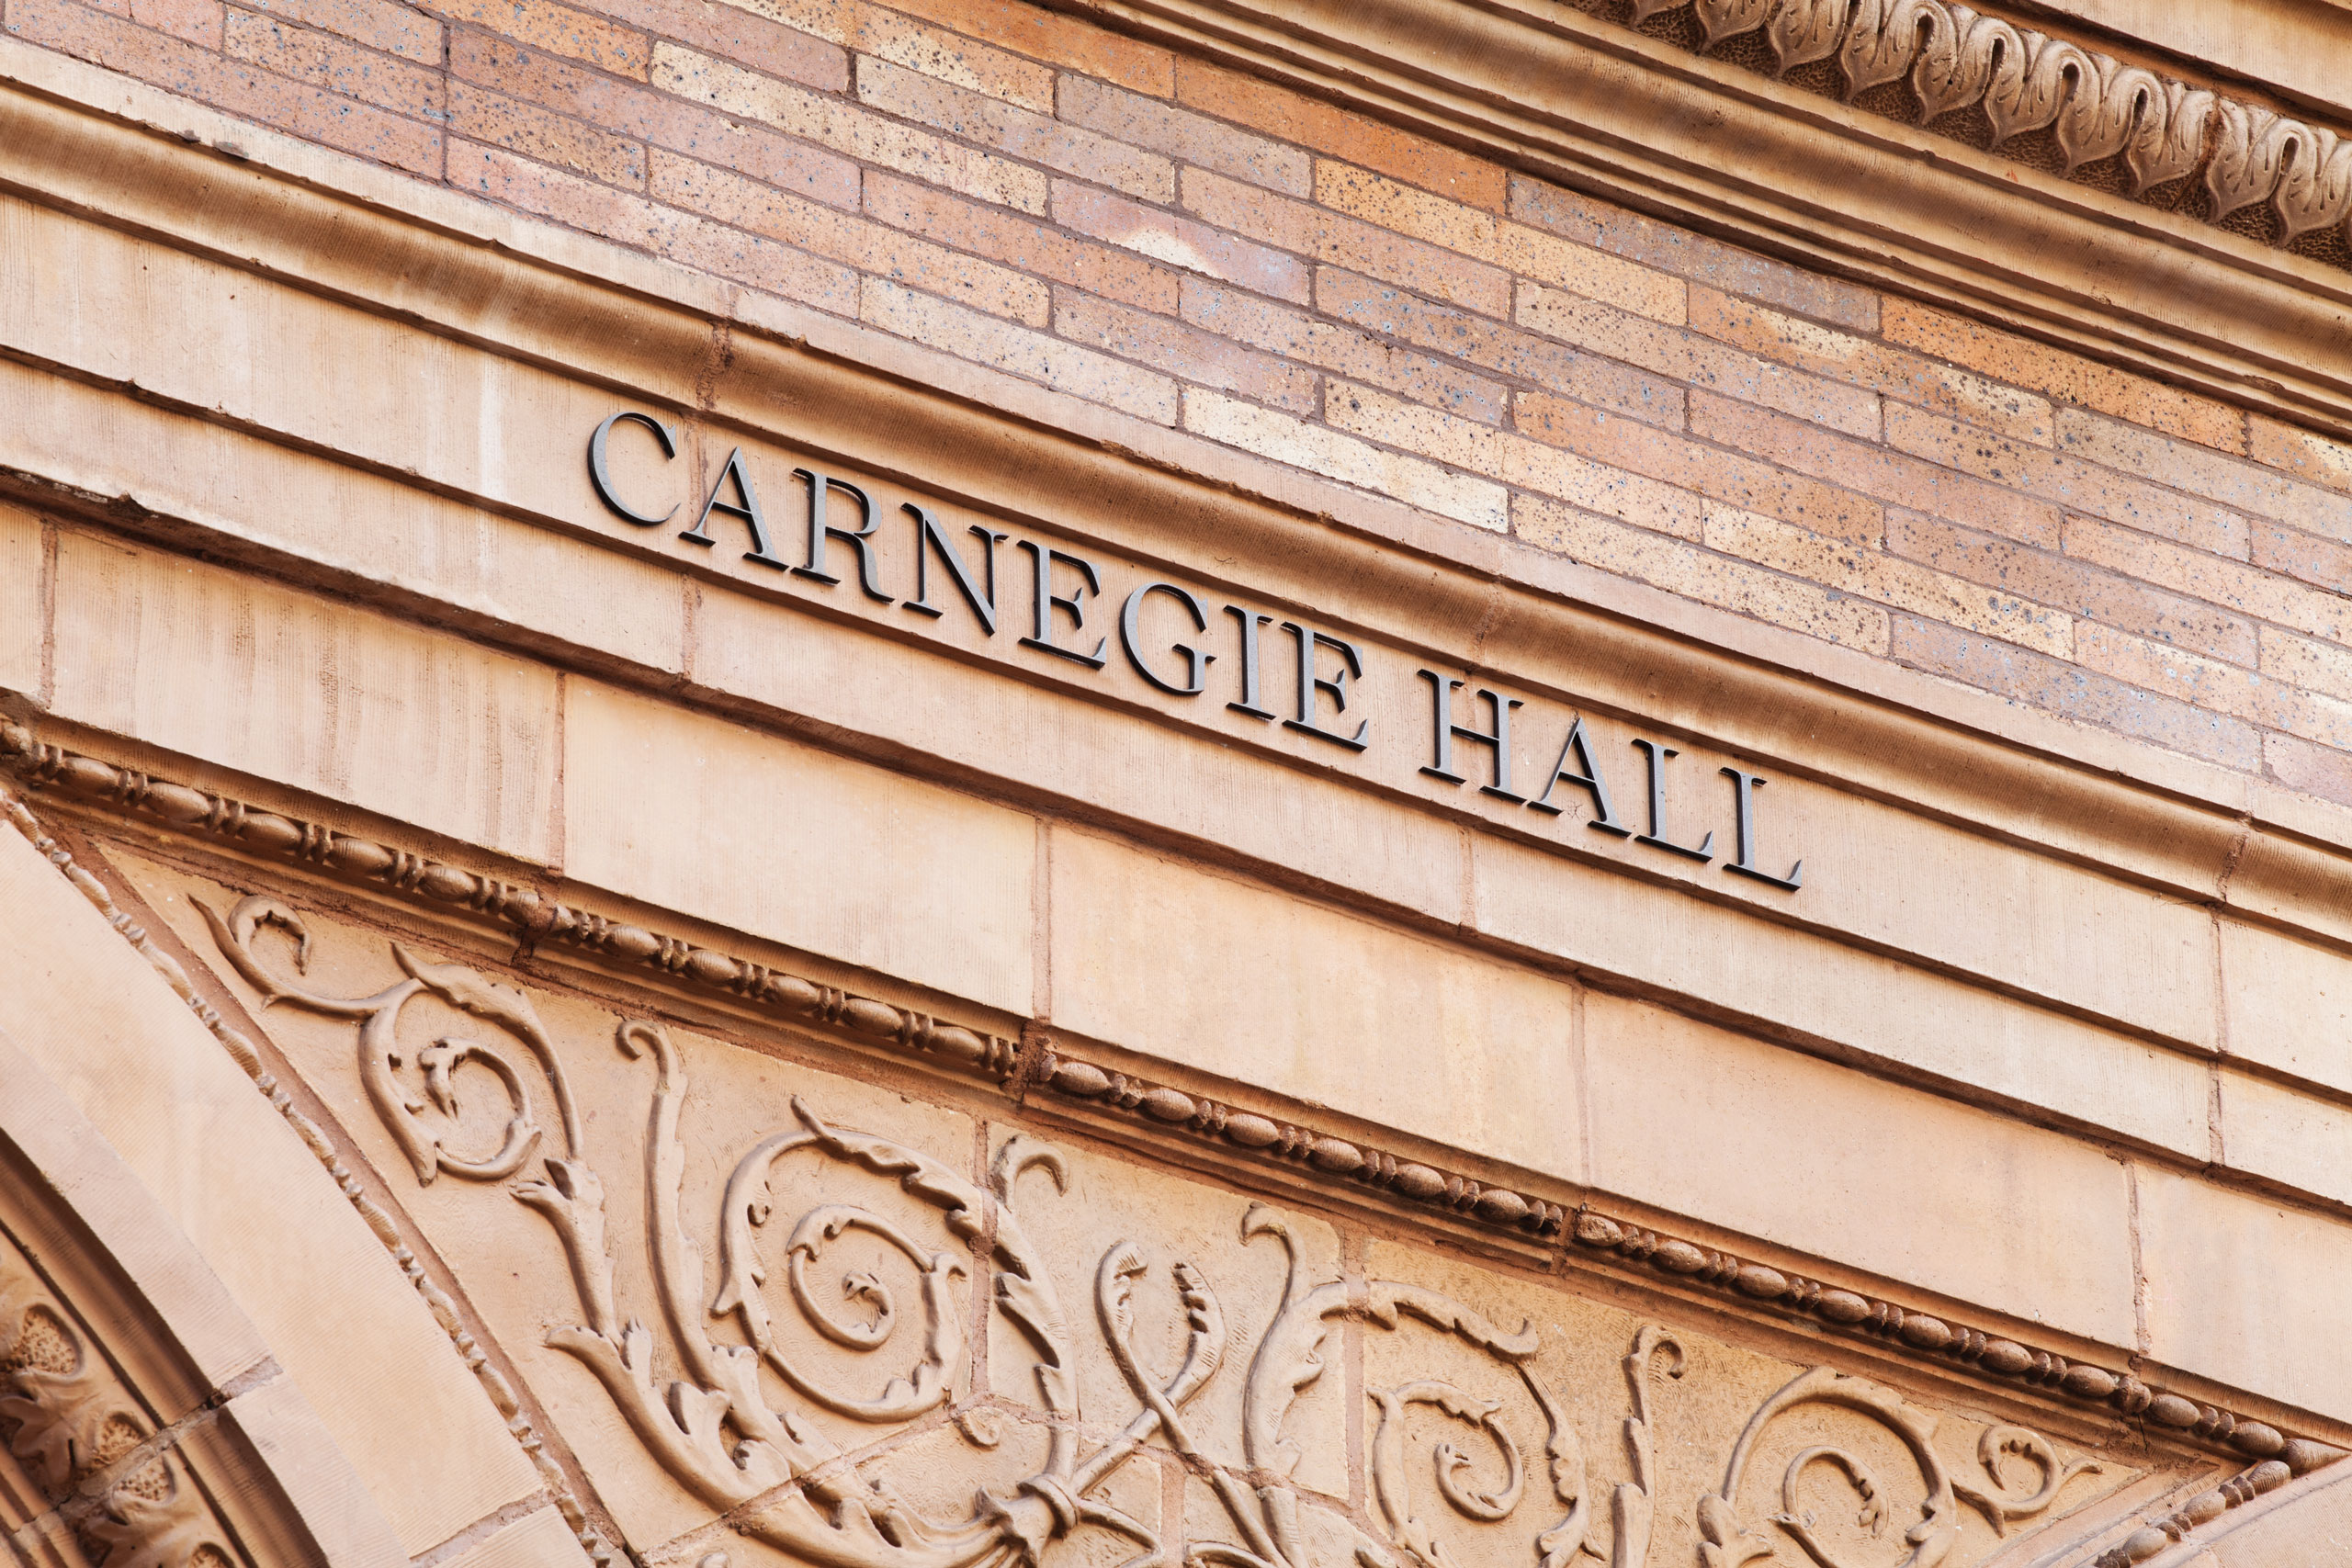 Signage at Carnegie Hall